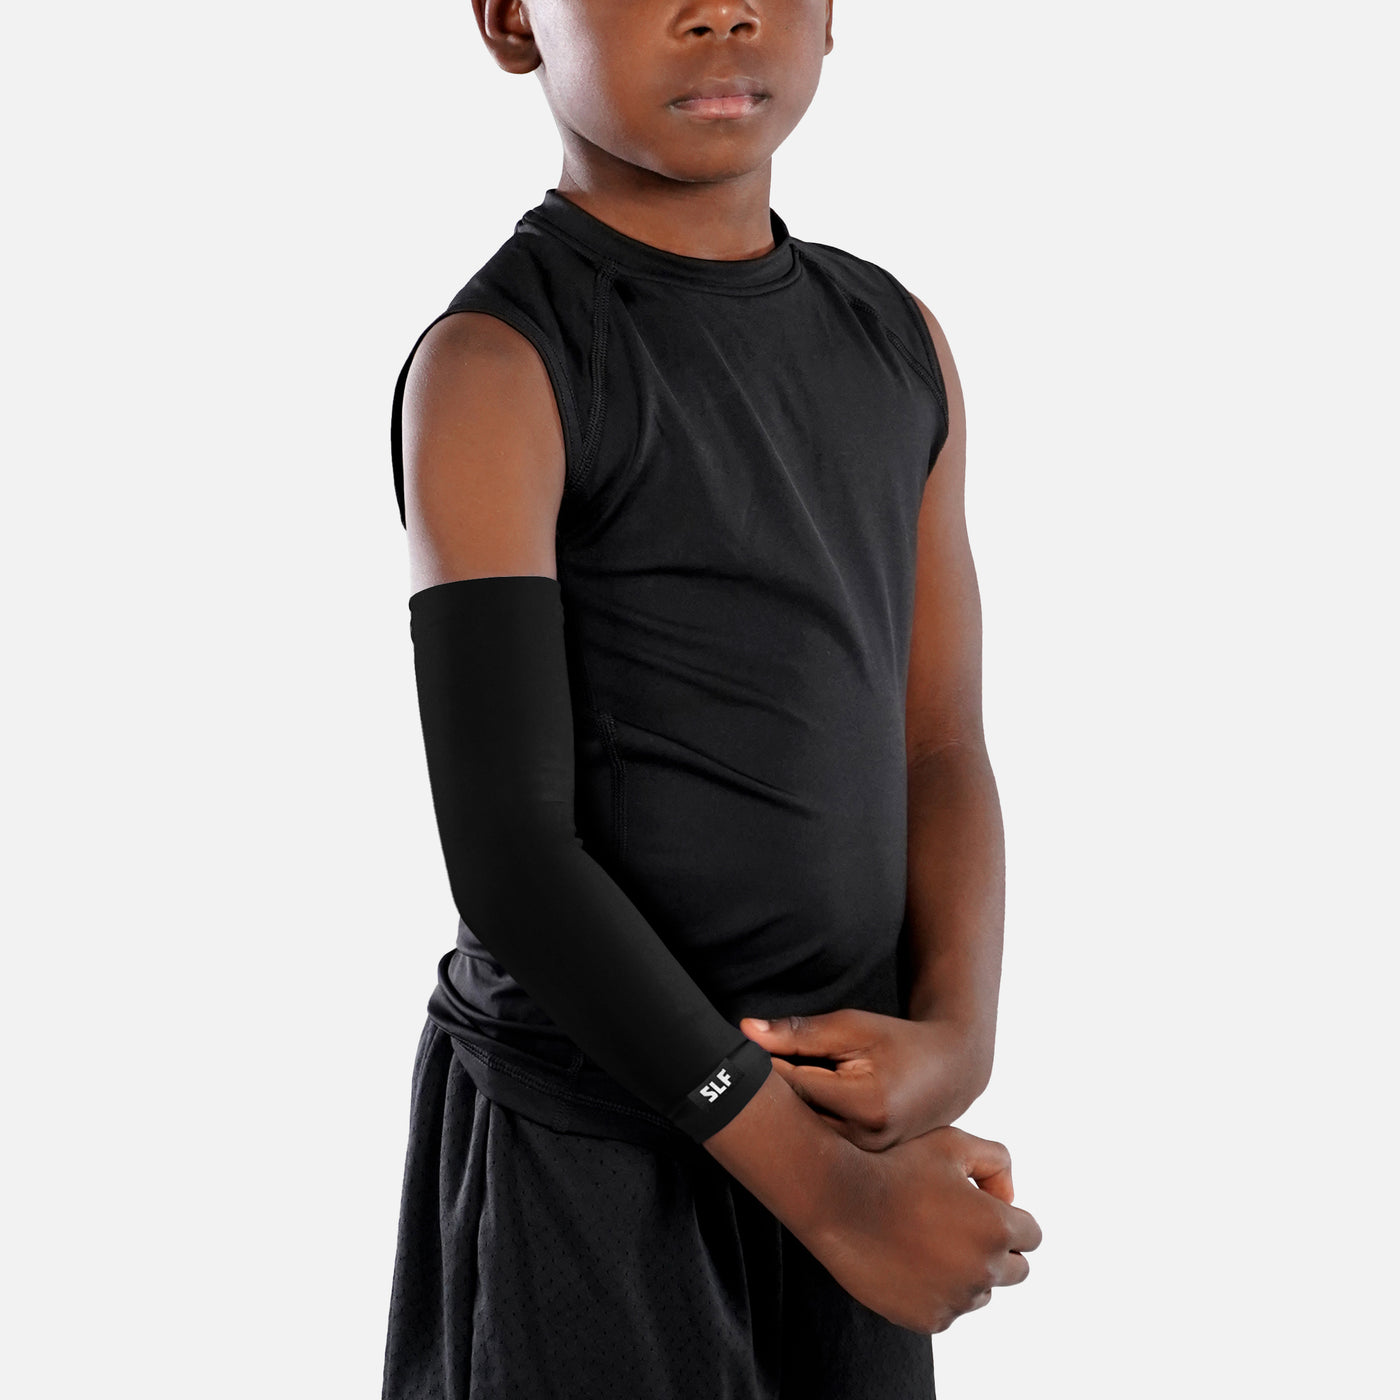 Basic Black Kids Arm Sleeve